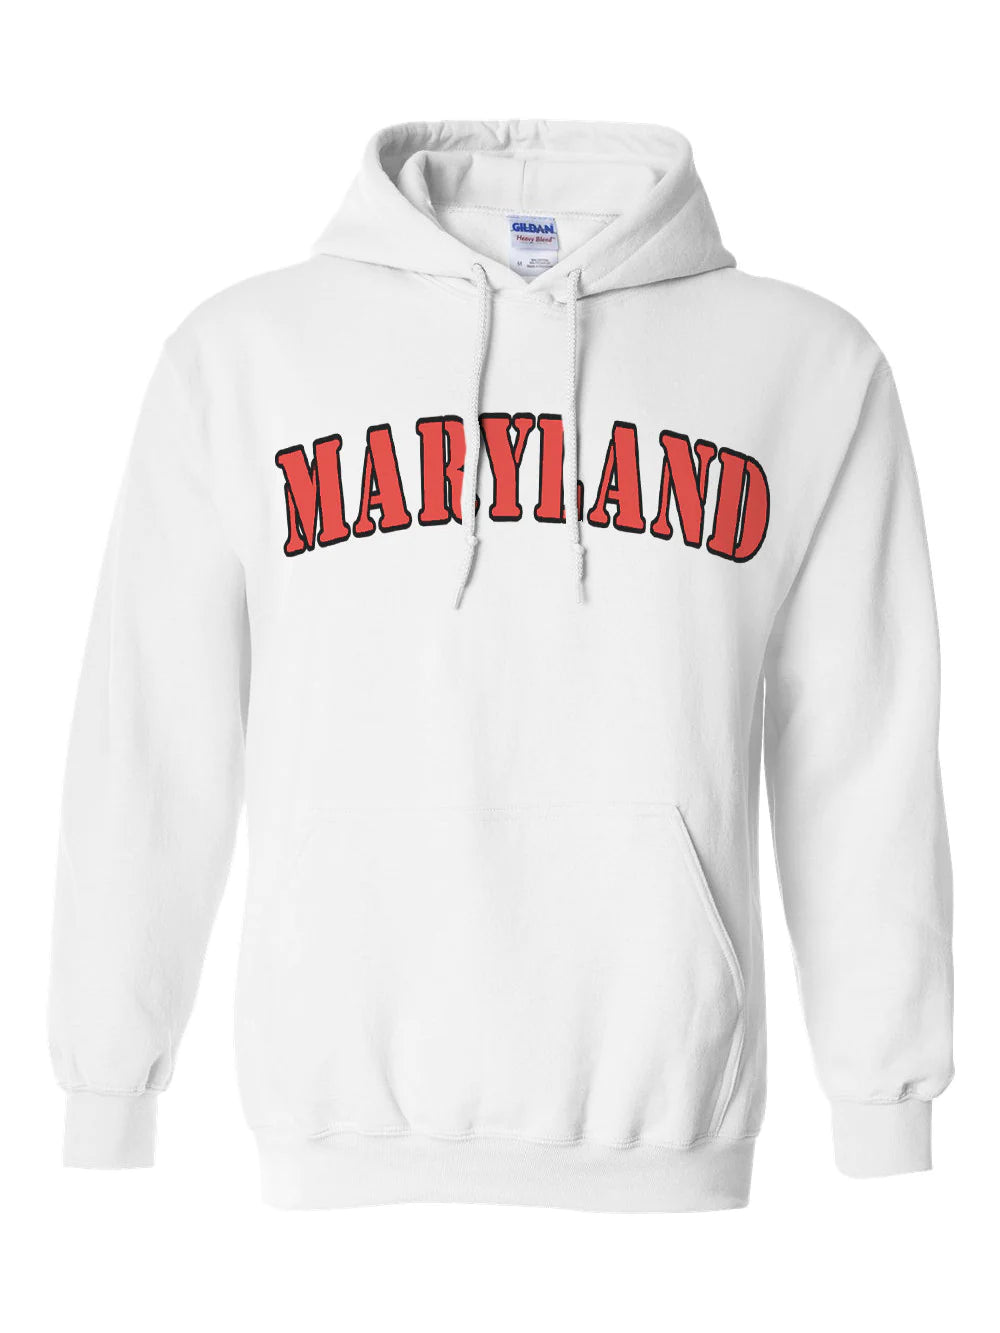 Maryland Sweatshirt Best Seller